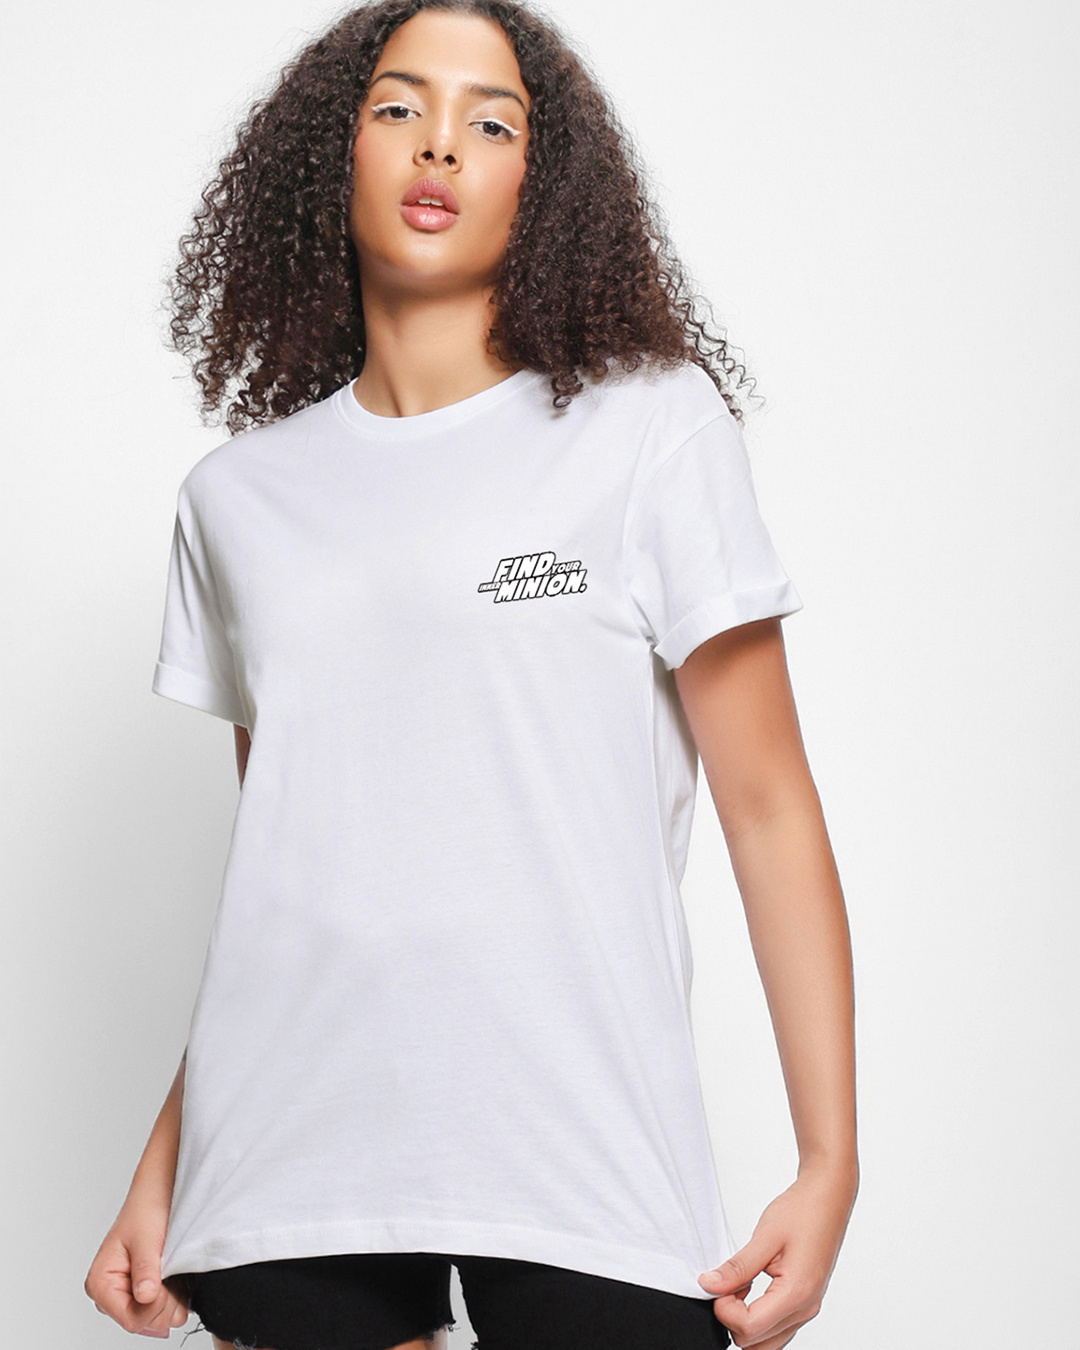 Shop Women's White Find Your Inner Minion Graphic Printed Boyfriend T-shirt-Back